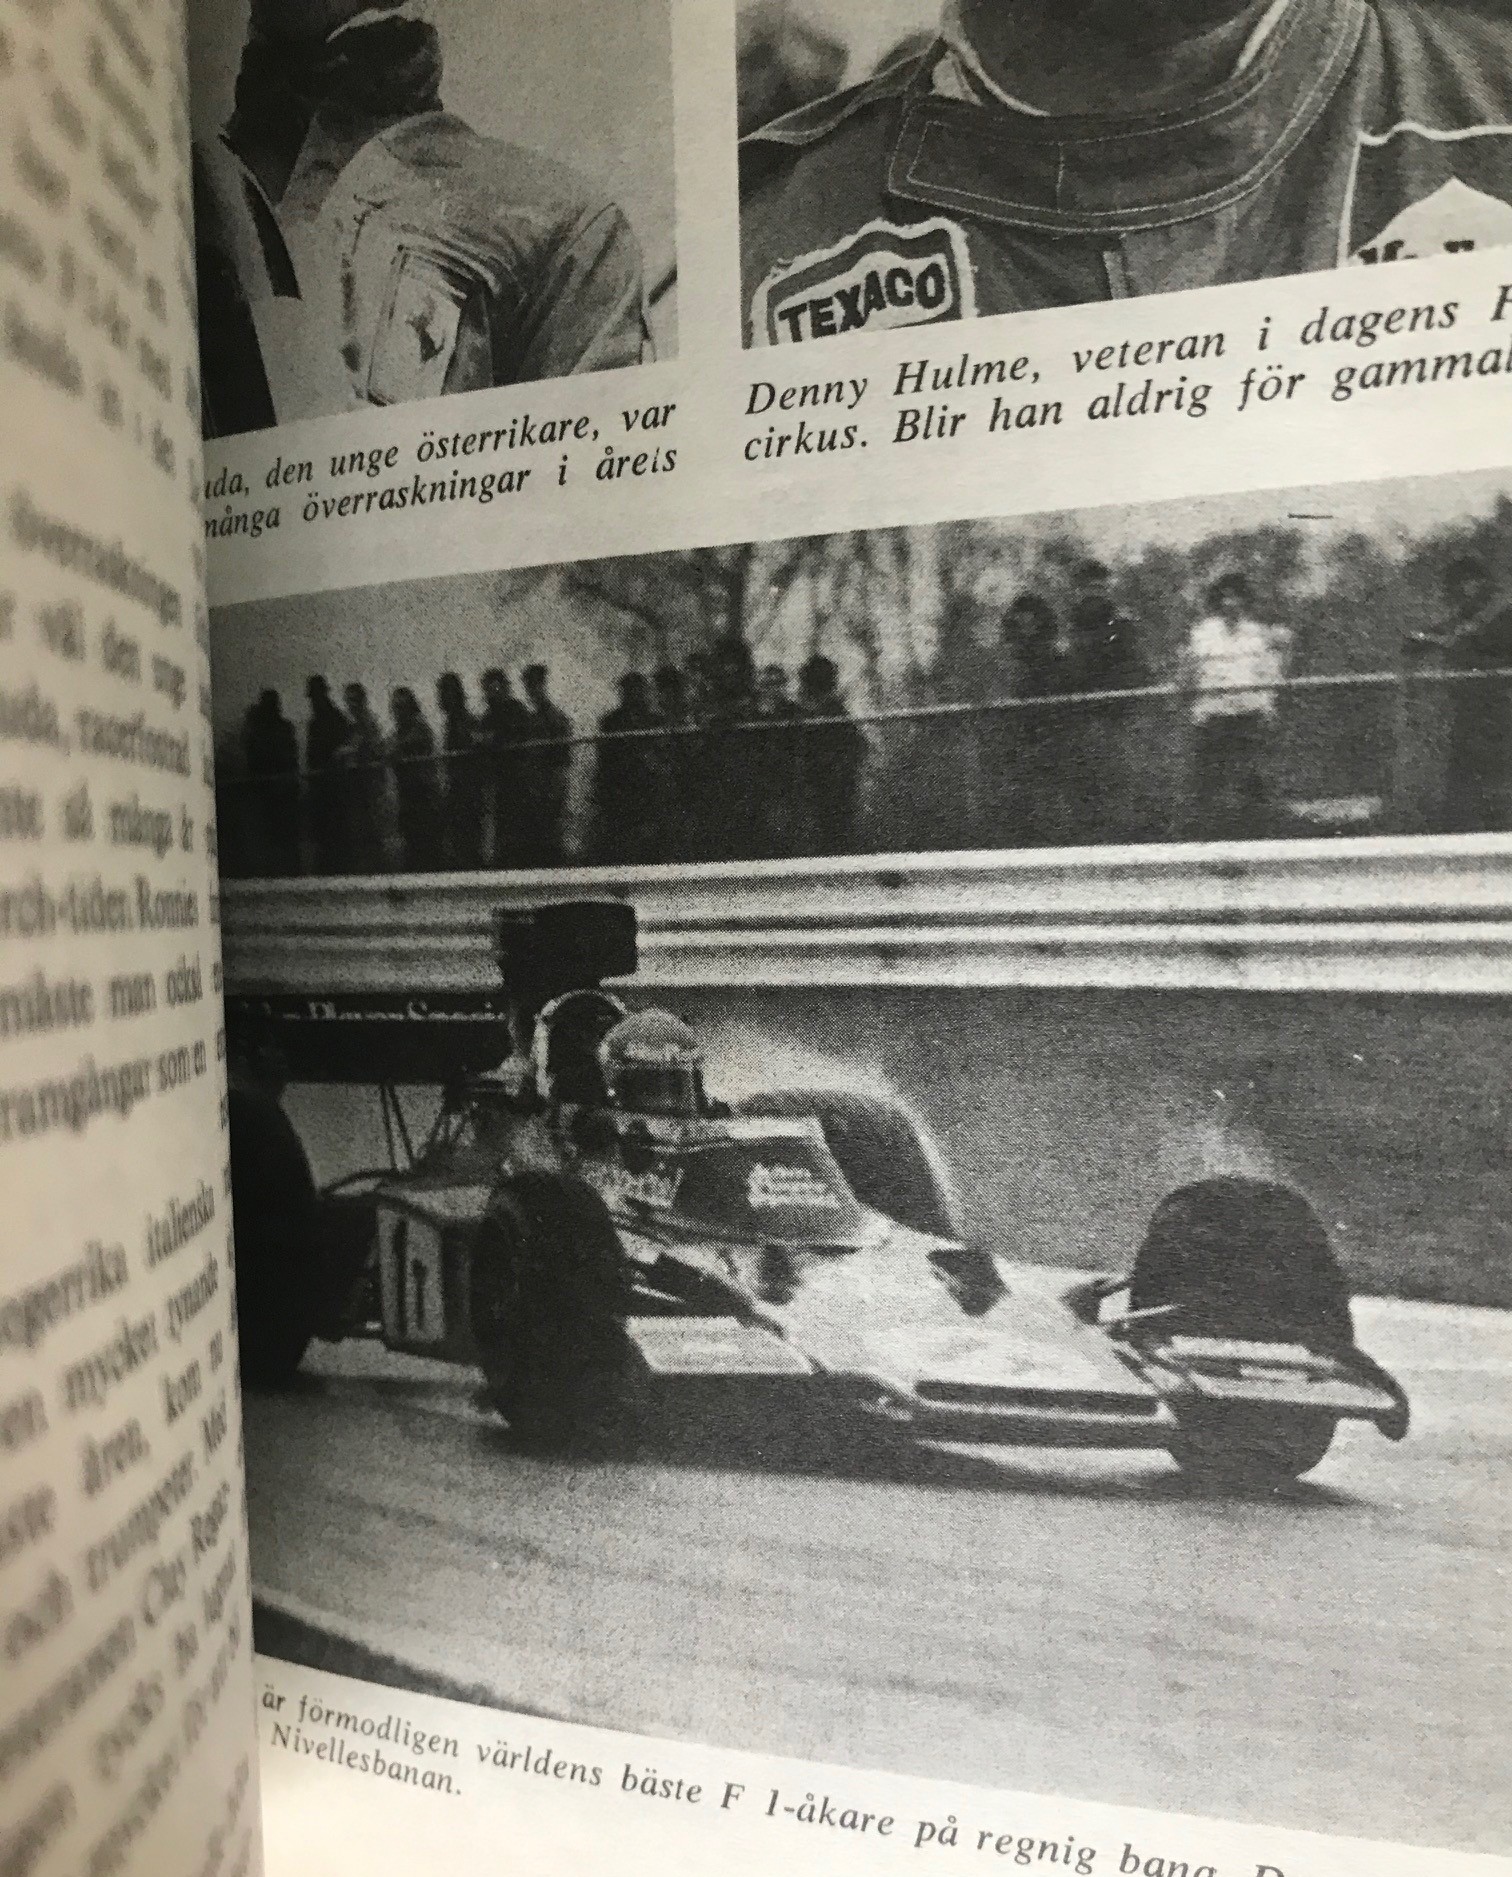 Ronnie Peterson i Motorns Mästare 1974/75 -format 13 x 19 cm, 130 sidor